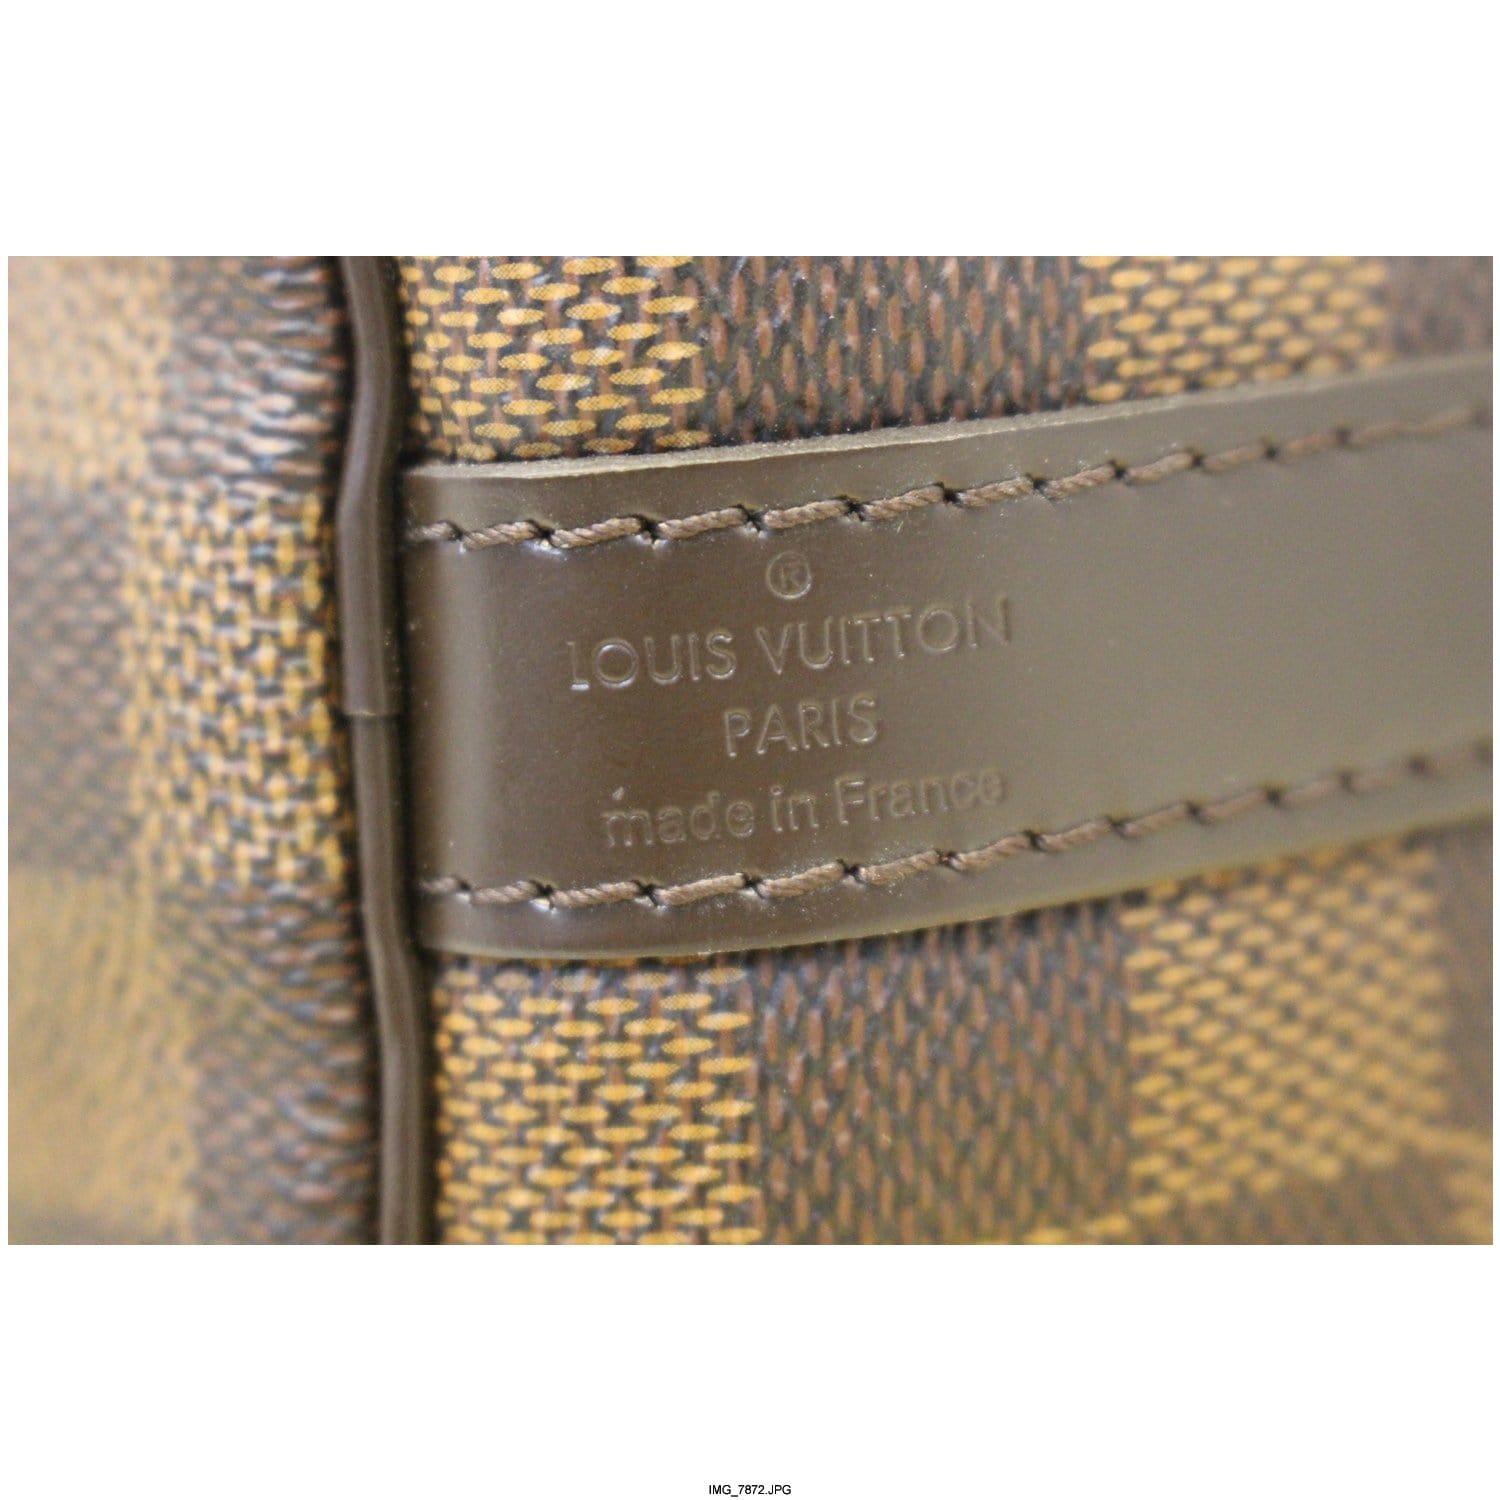 Speedy bandoulière leather handbag Louis Vuitton Beige in Leather - 32736402